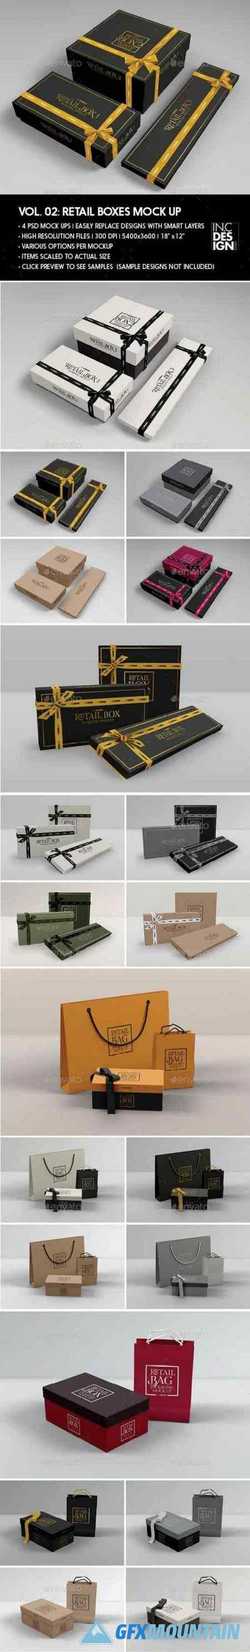 RETAIL BOXES VOL.2: BAG & BOX PACKAGING MOCK UPS V 1.2 - 19346258